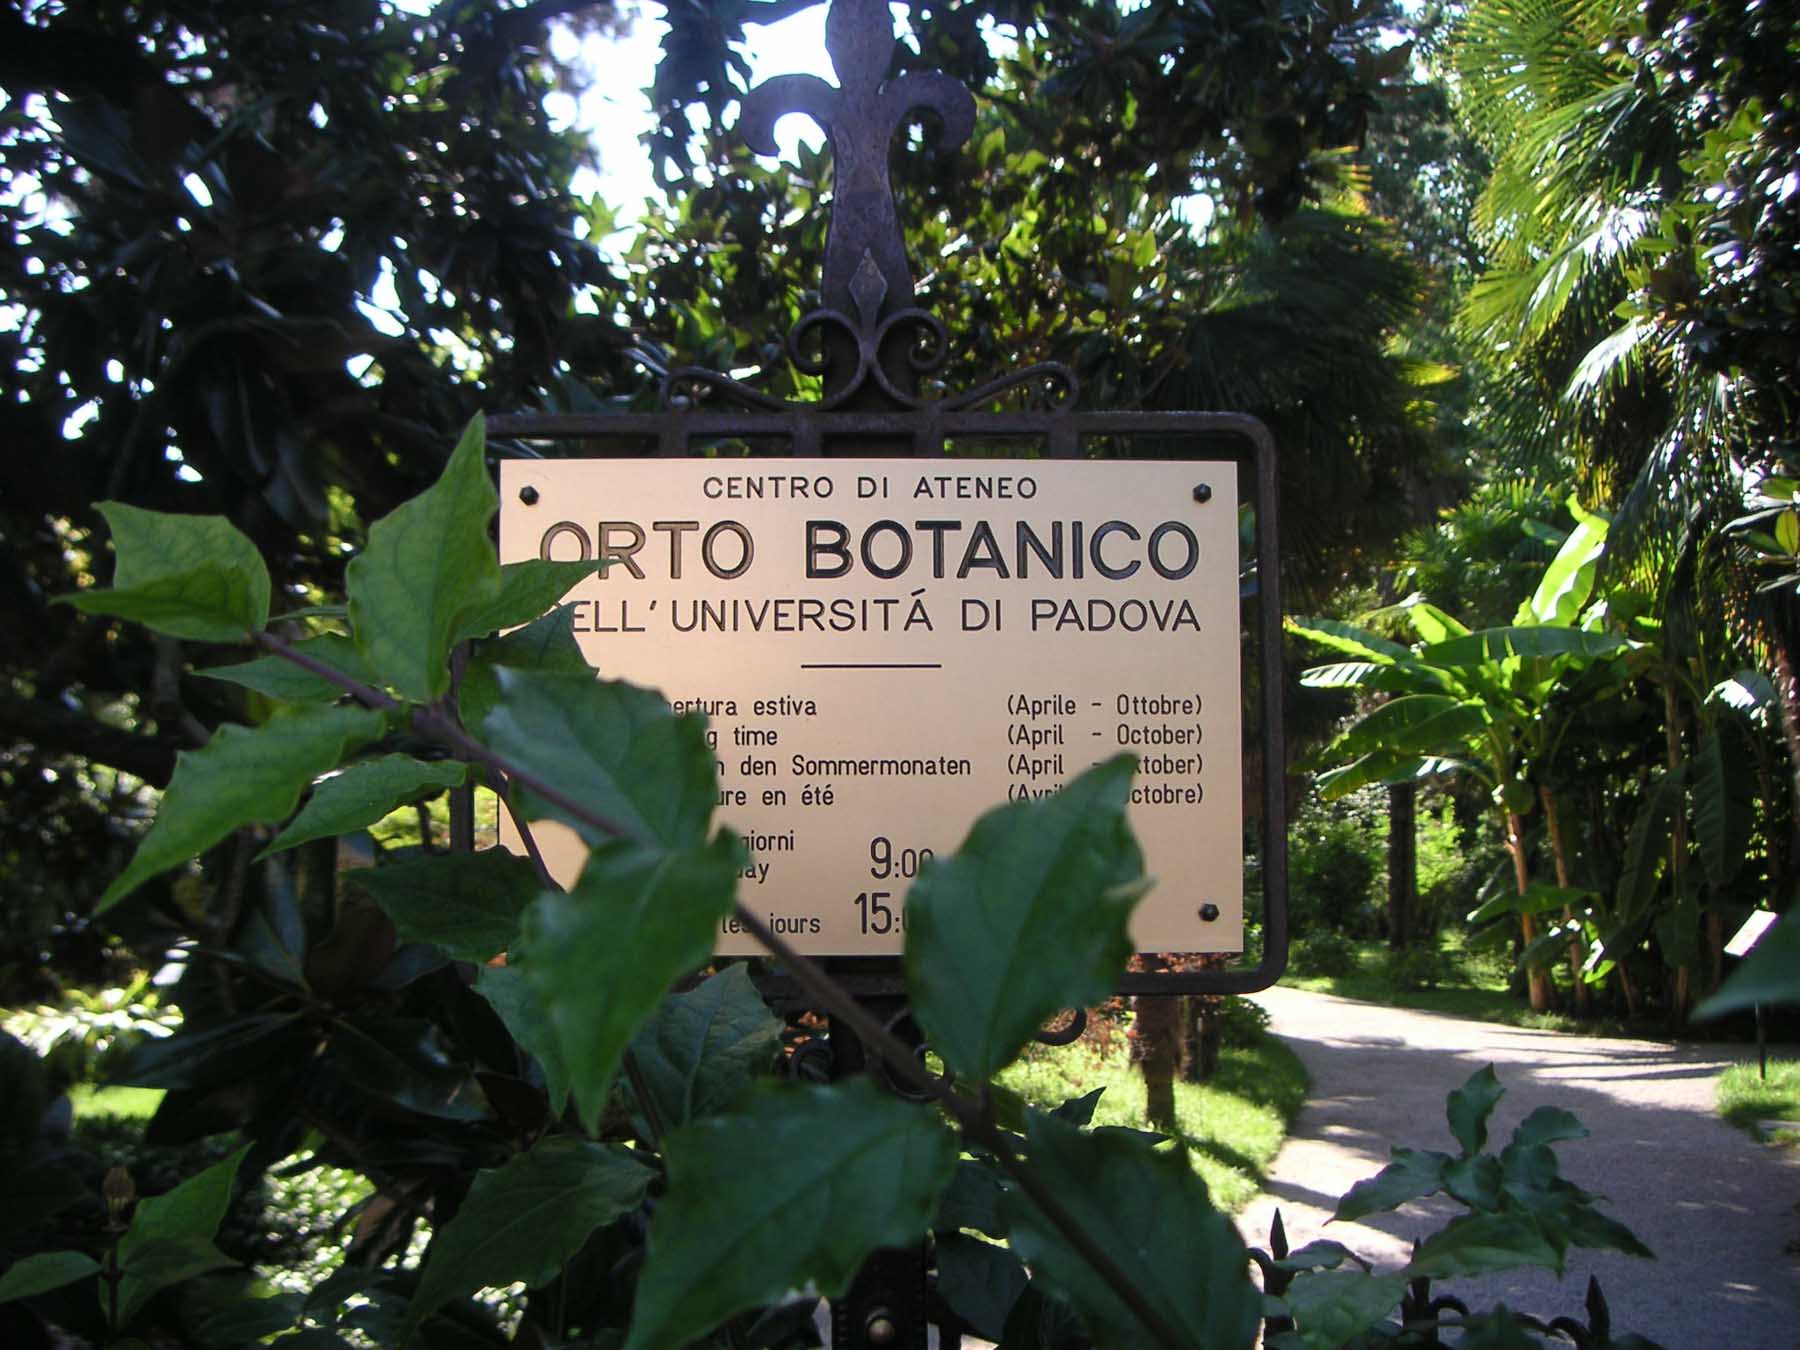 Orto botanico, Padova